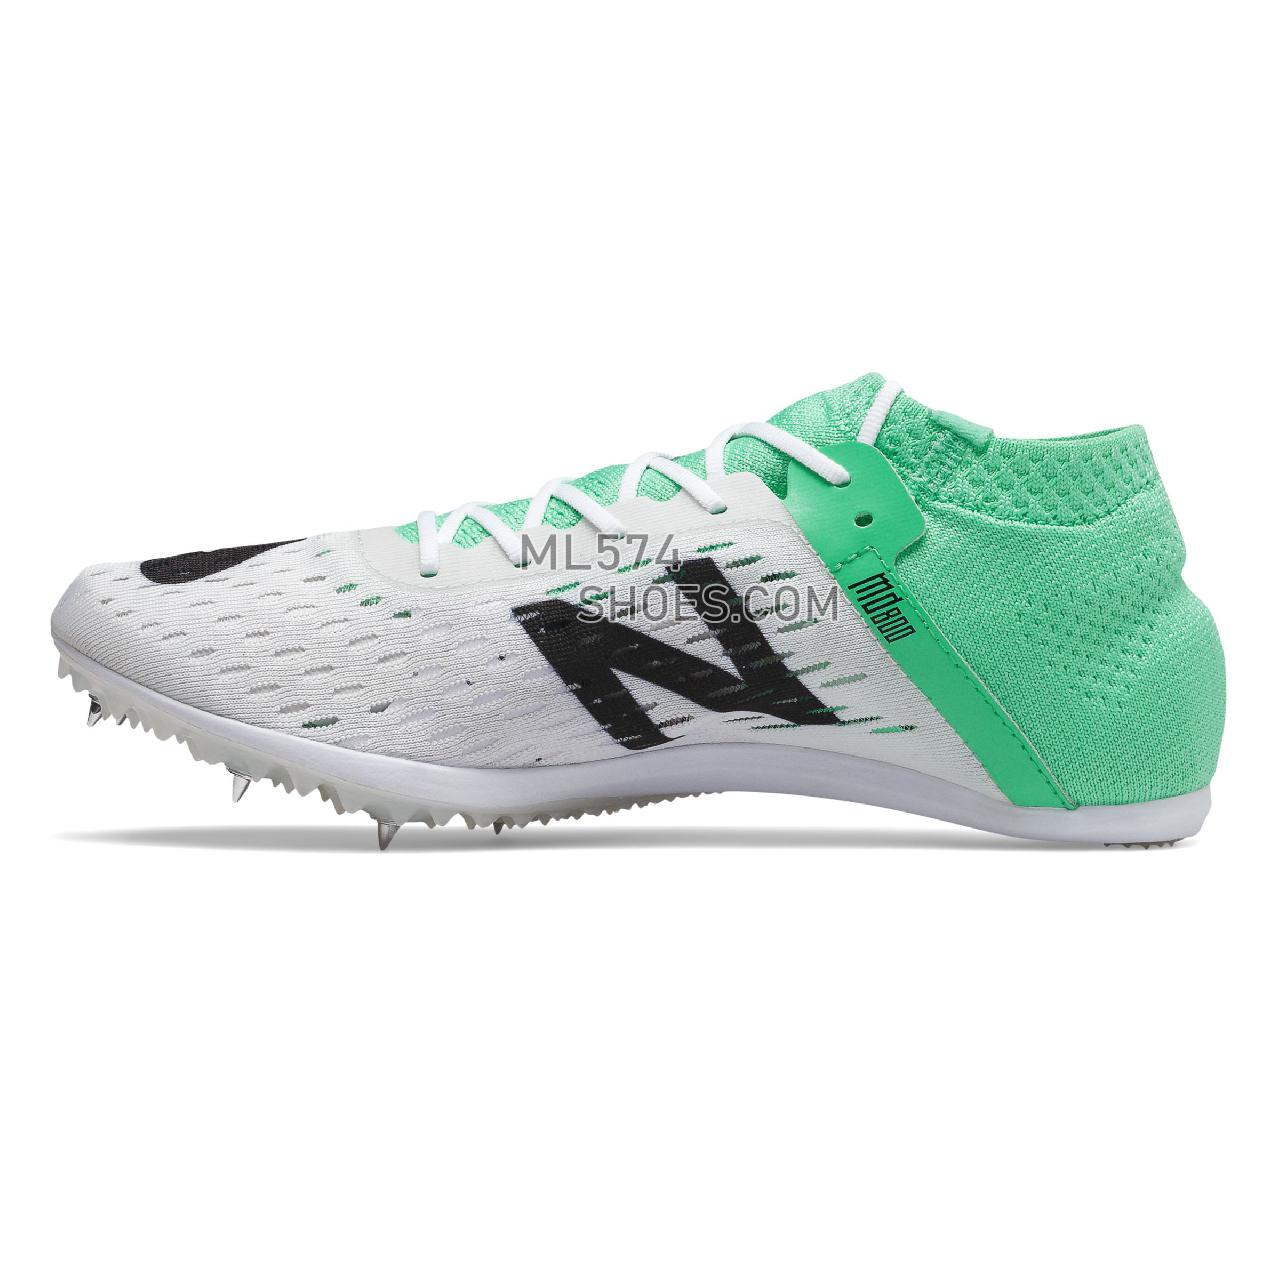 New Balance MD800v6 Spike - Women's MD800v6 Spike Running - White with Neon Emerald - WMD800G6